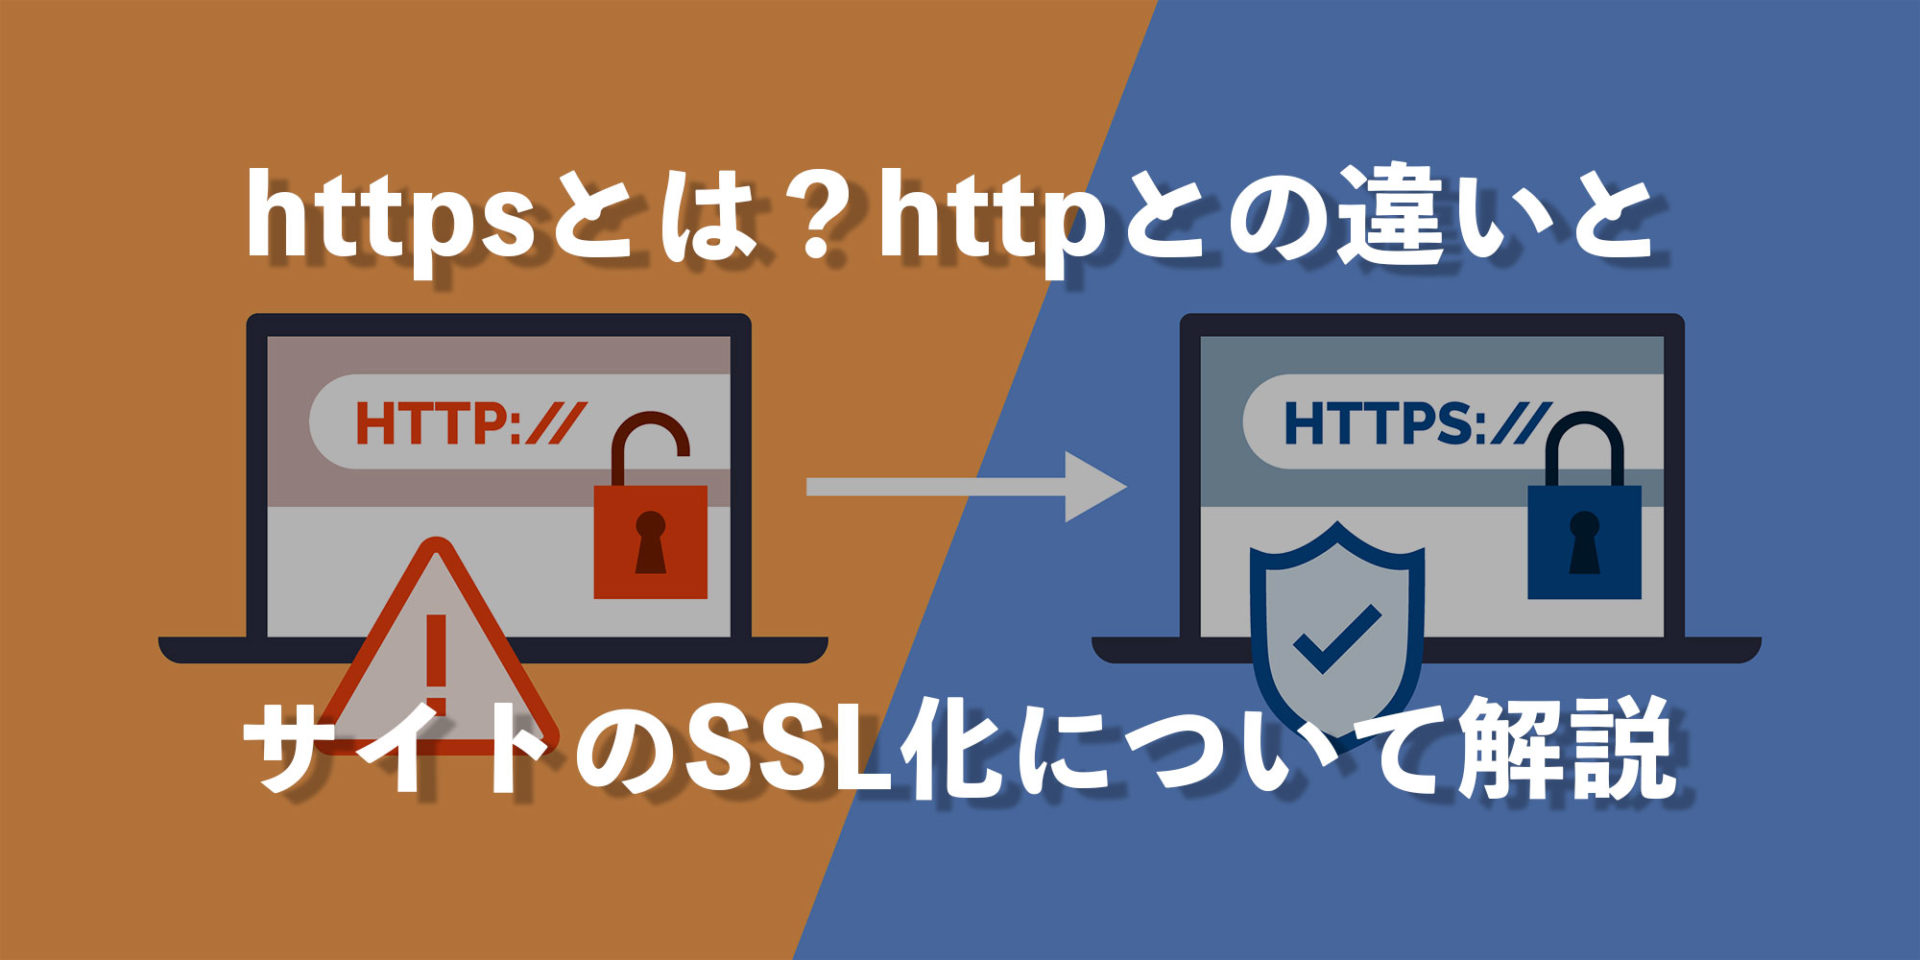 SSLとは？httpsとhttpの違いと、サイトのSSL化について解説